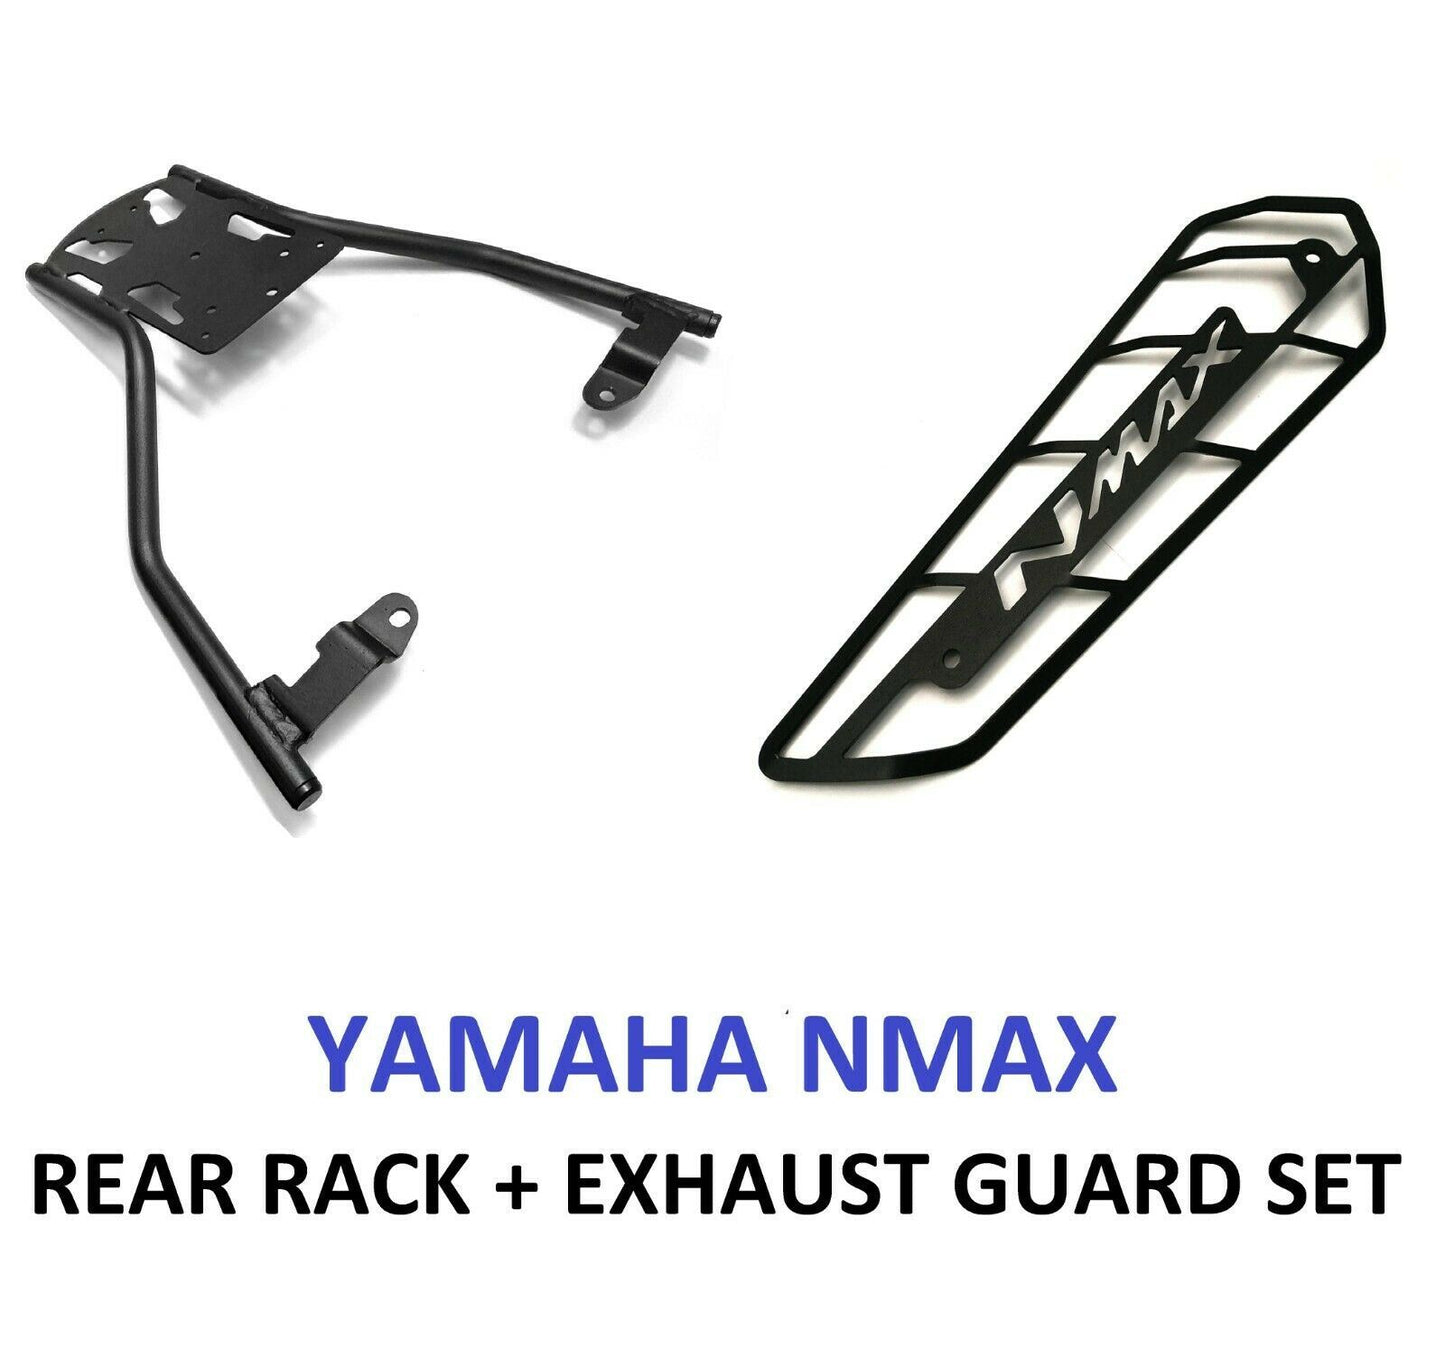 Yamaha NMAX rear rack luggage carrier + exhaust guard set